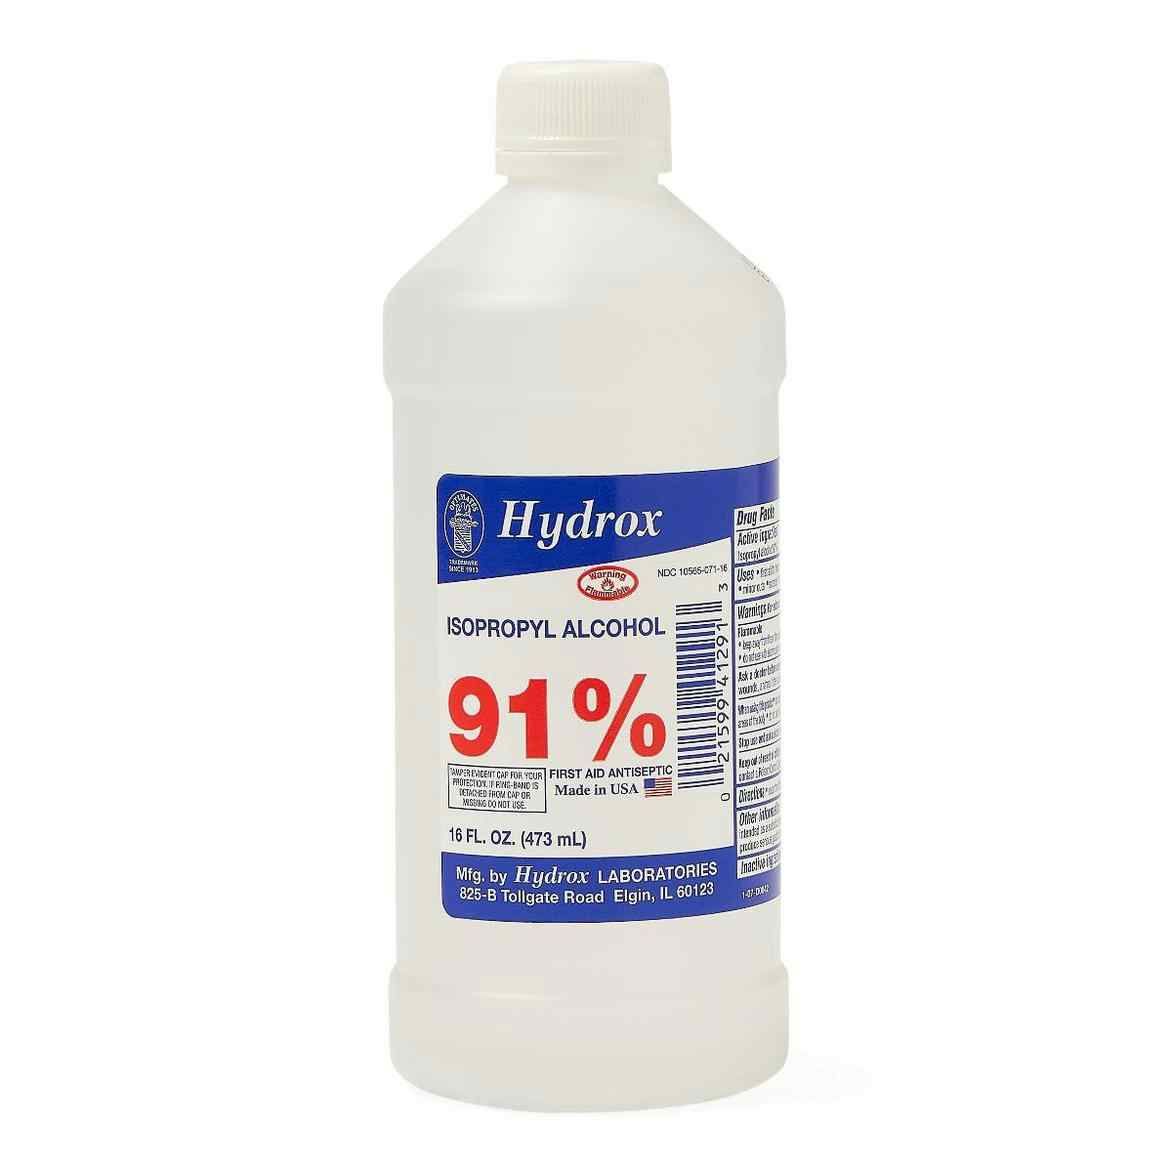 Hydrox Isopropyl Alcohol, 91%